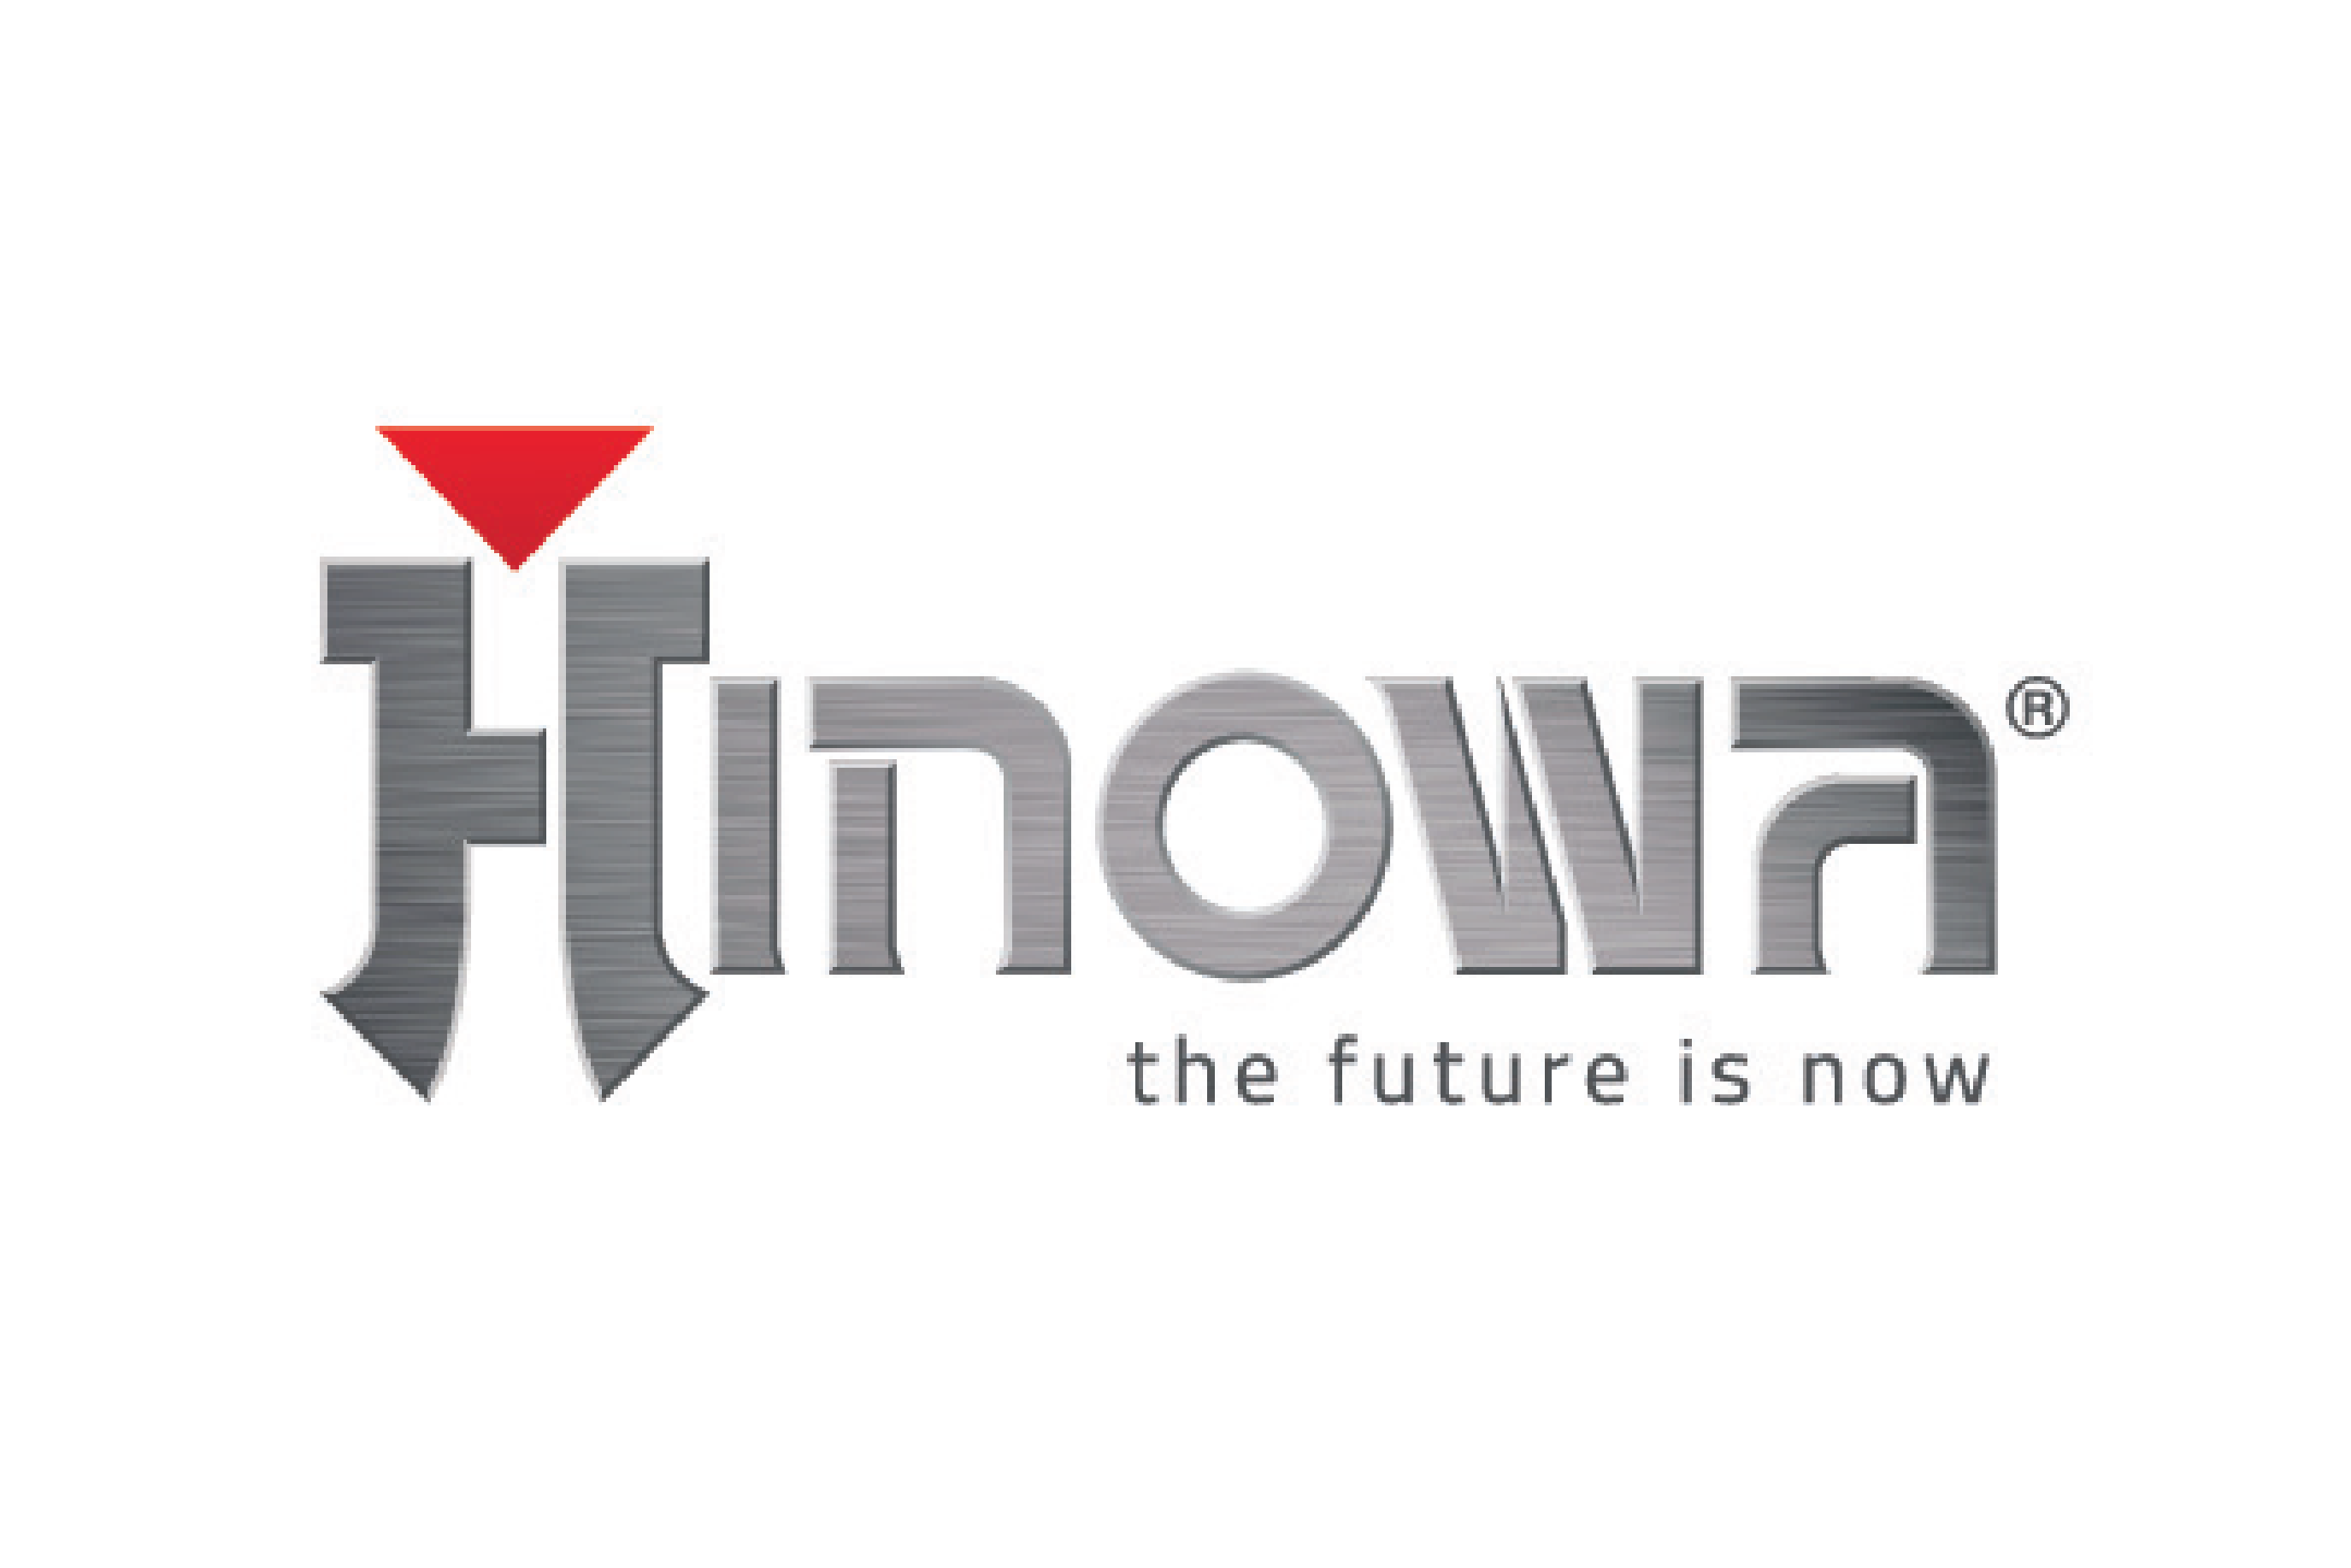 Hiwona logo on a white background